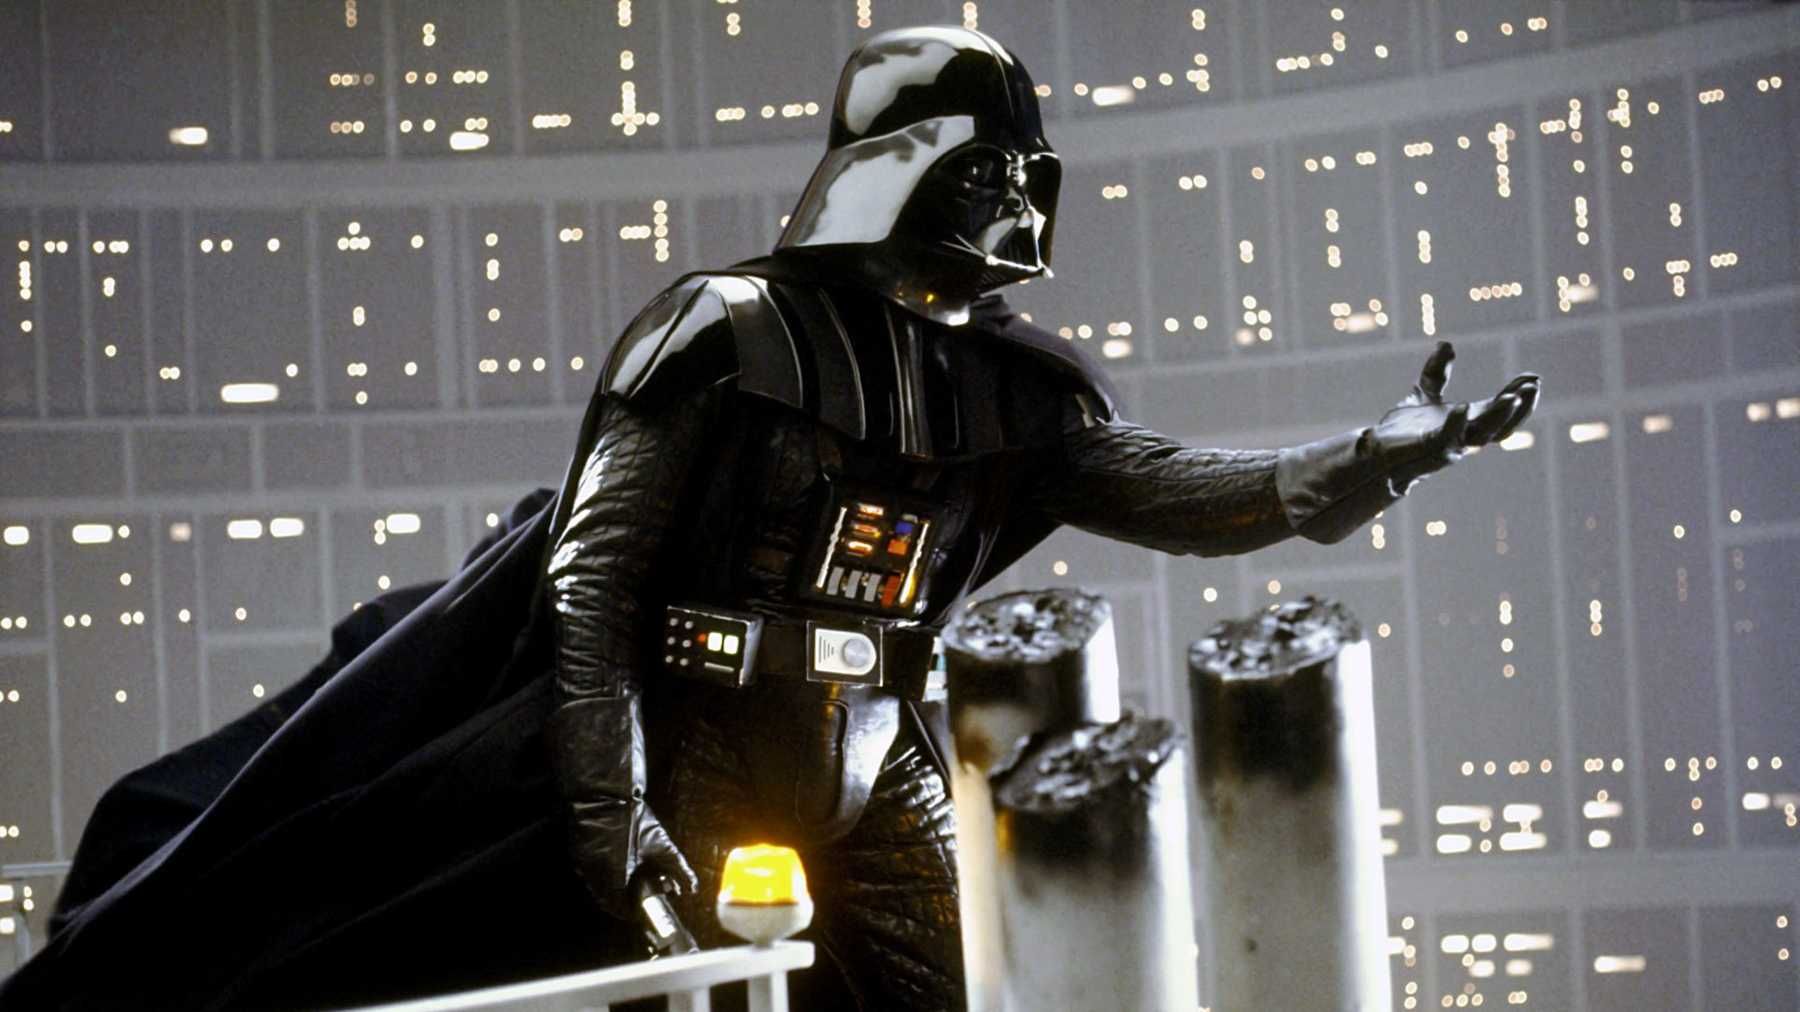 Dark Vador étendant son bras dans Star Wars : L'Empire contre-attaque